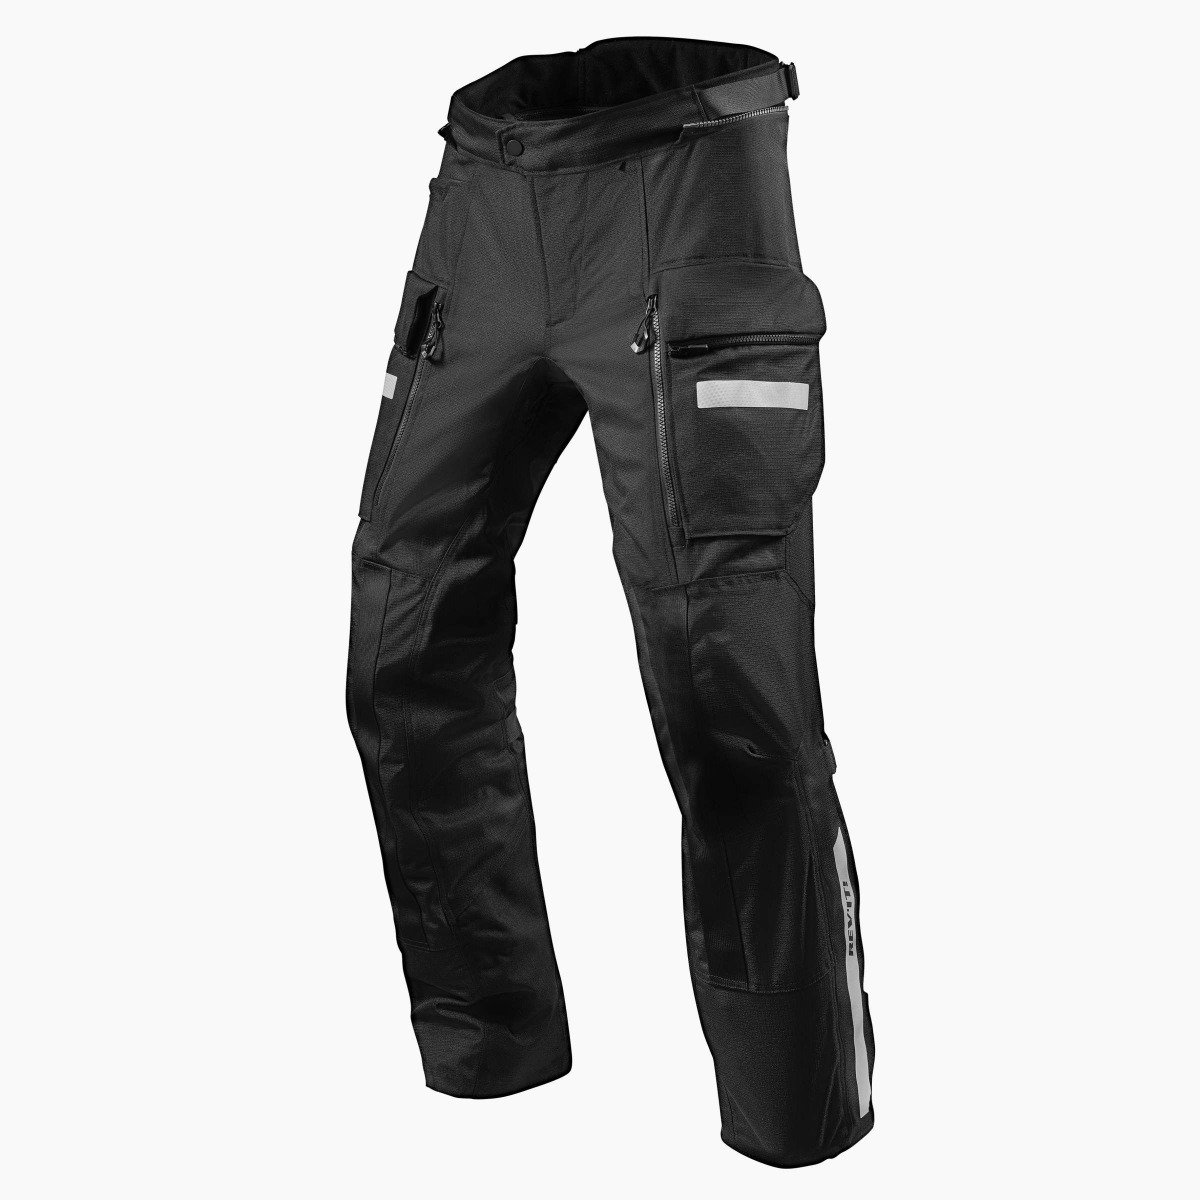 Image of REV'IT! Sand 4 H2O Standard Black Motorcycle Pants Talla S